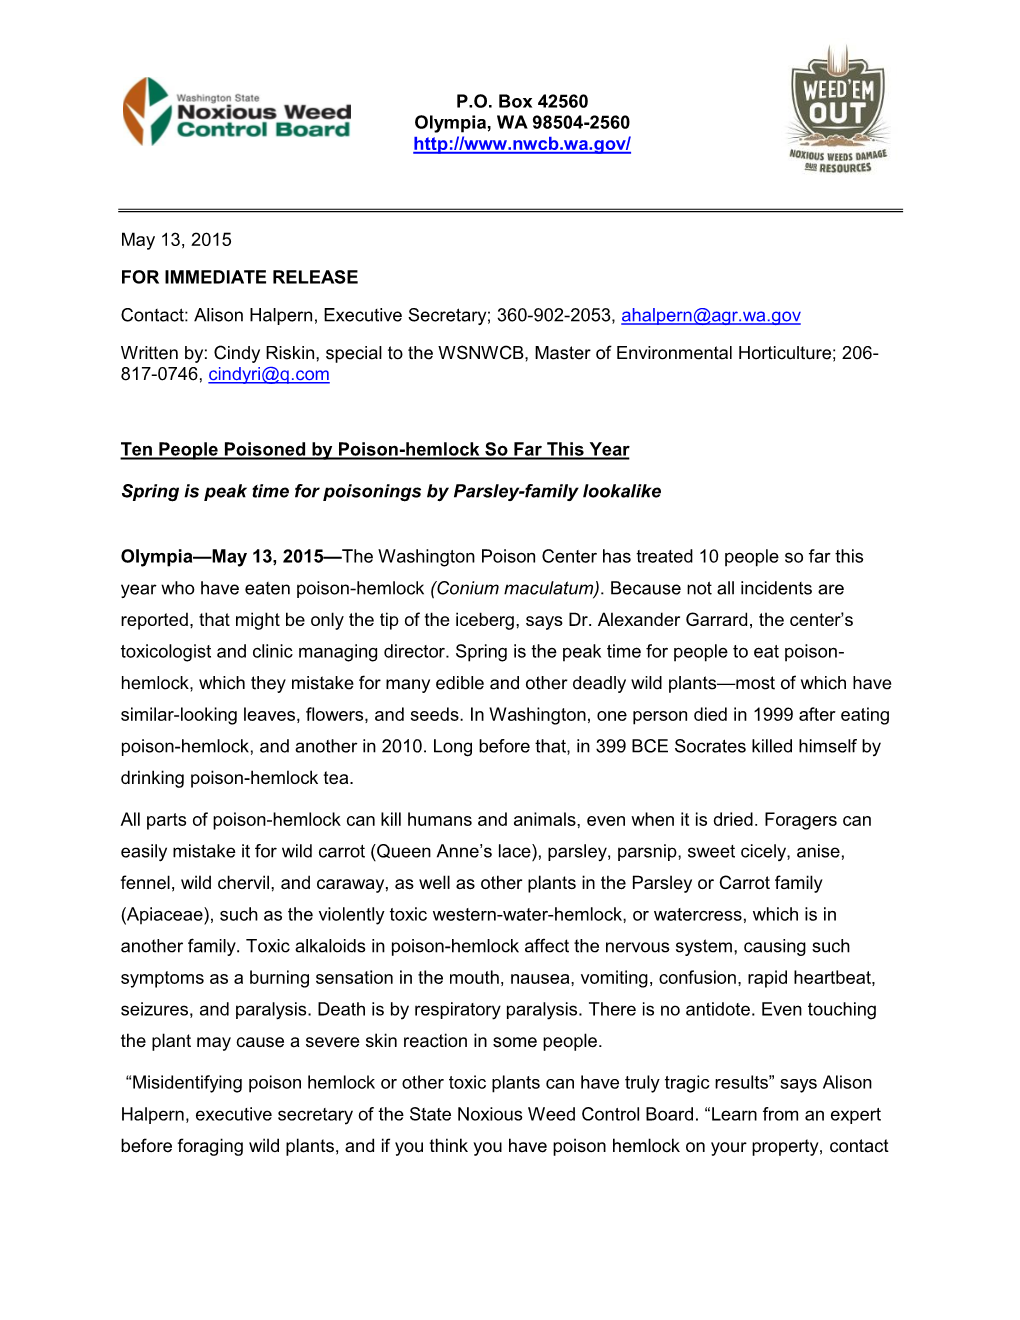 Poison Hemlock Press Release